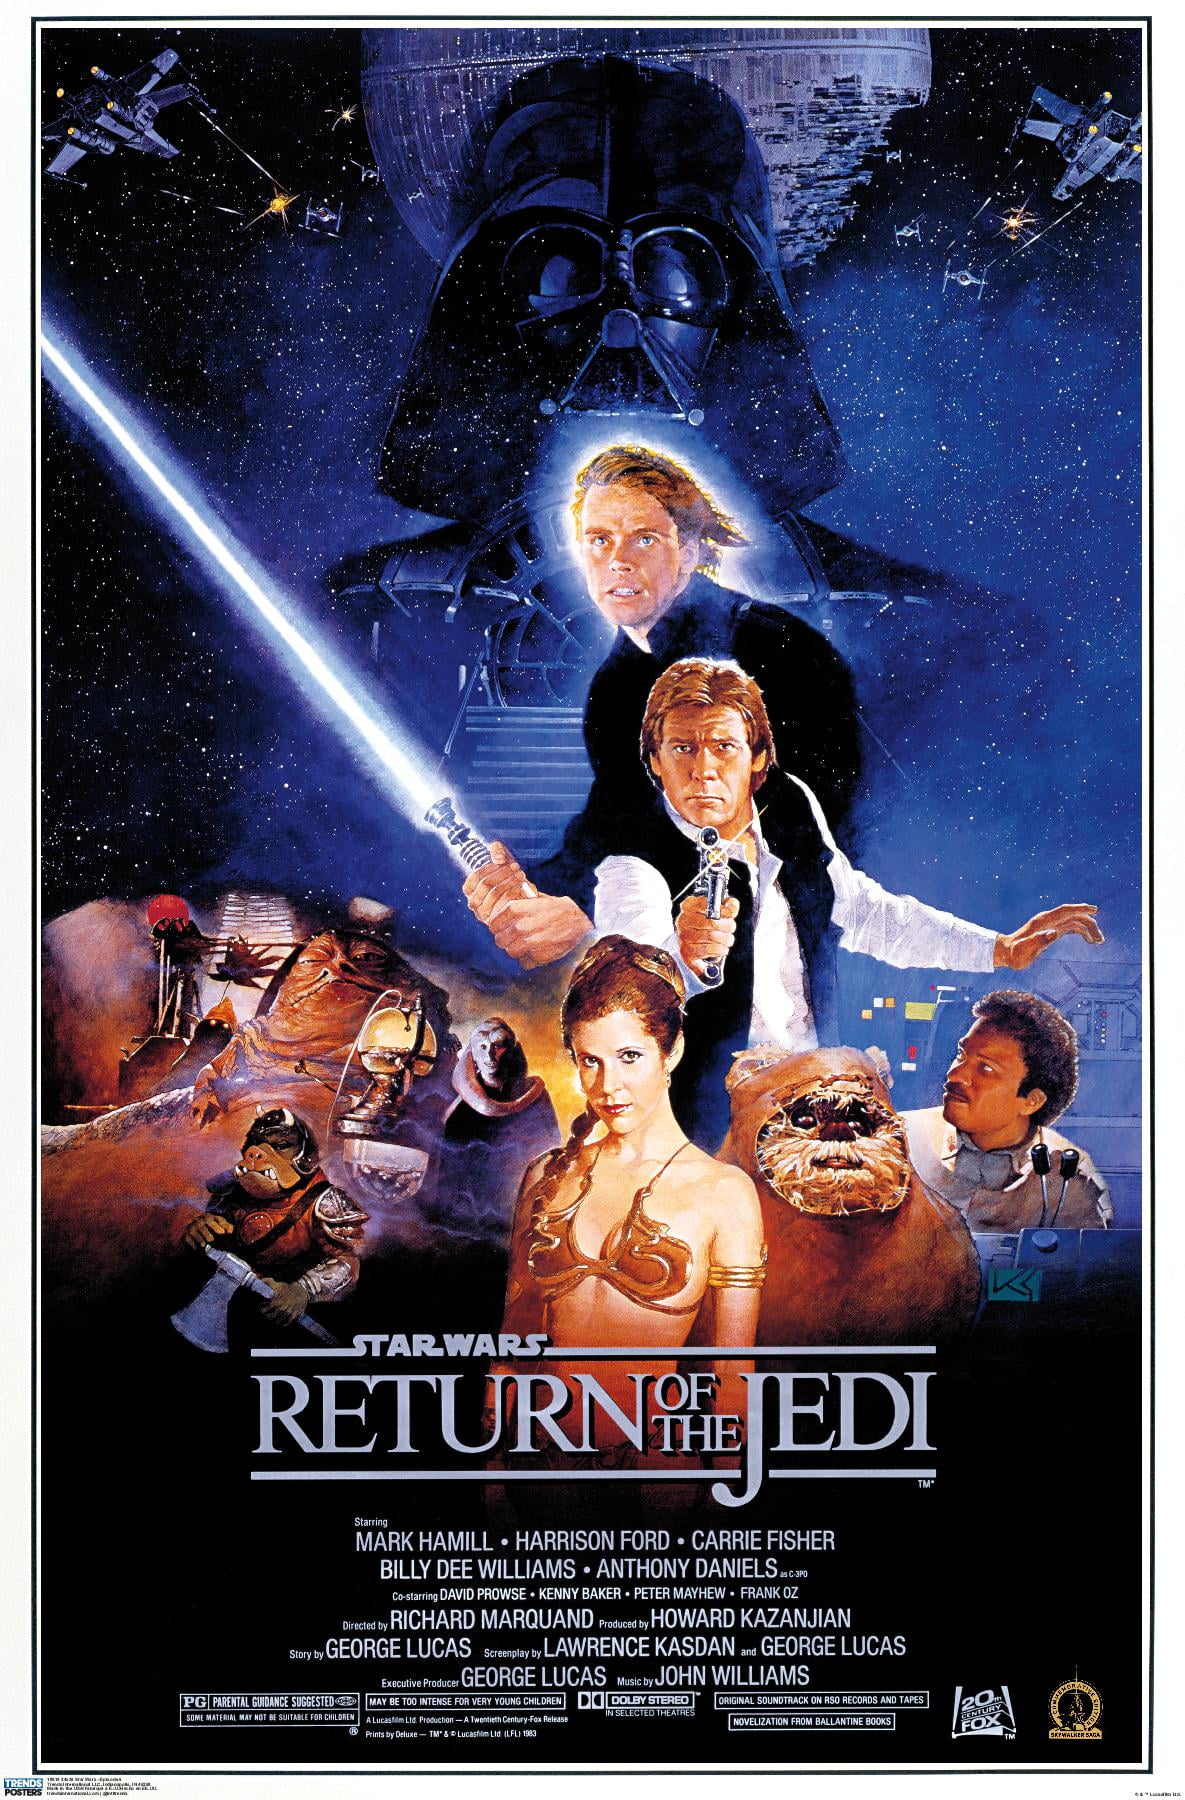 Star Wars Return of the Jedi Poster Size 24" x 36" LMT FREE SHIP EDIT 